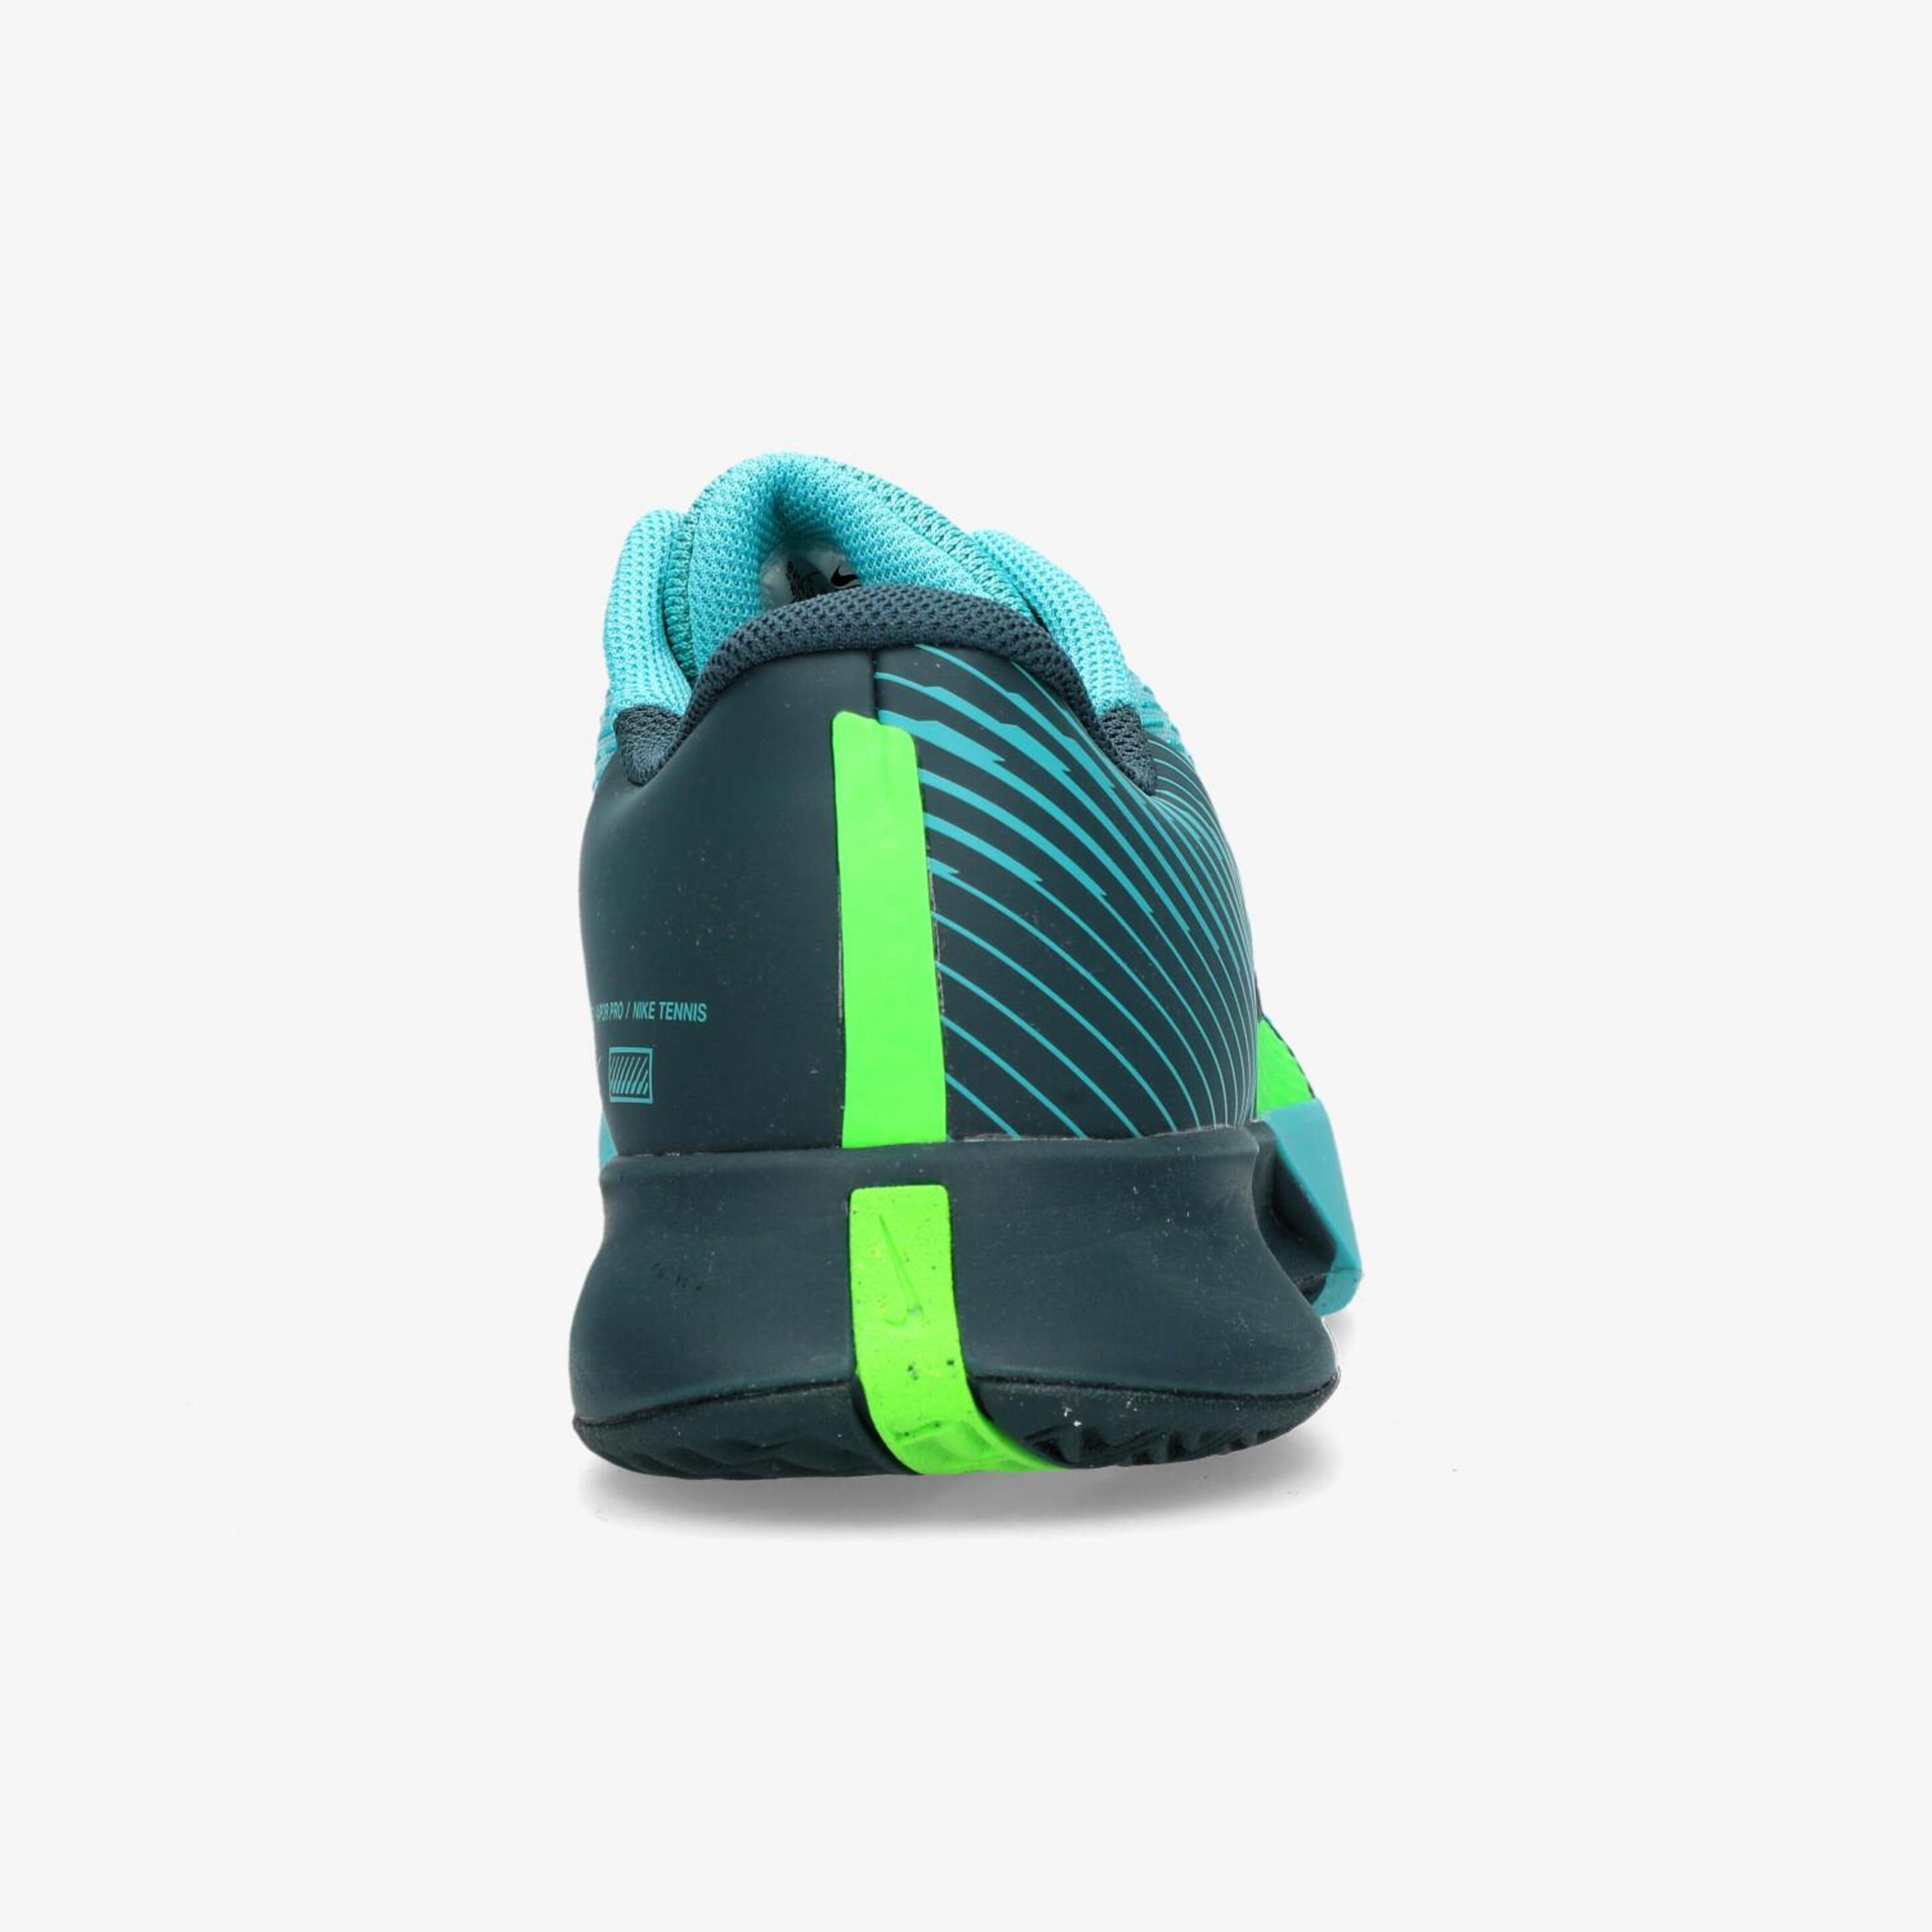 Nike Zoom Vapor Pro 2